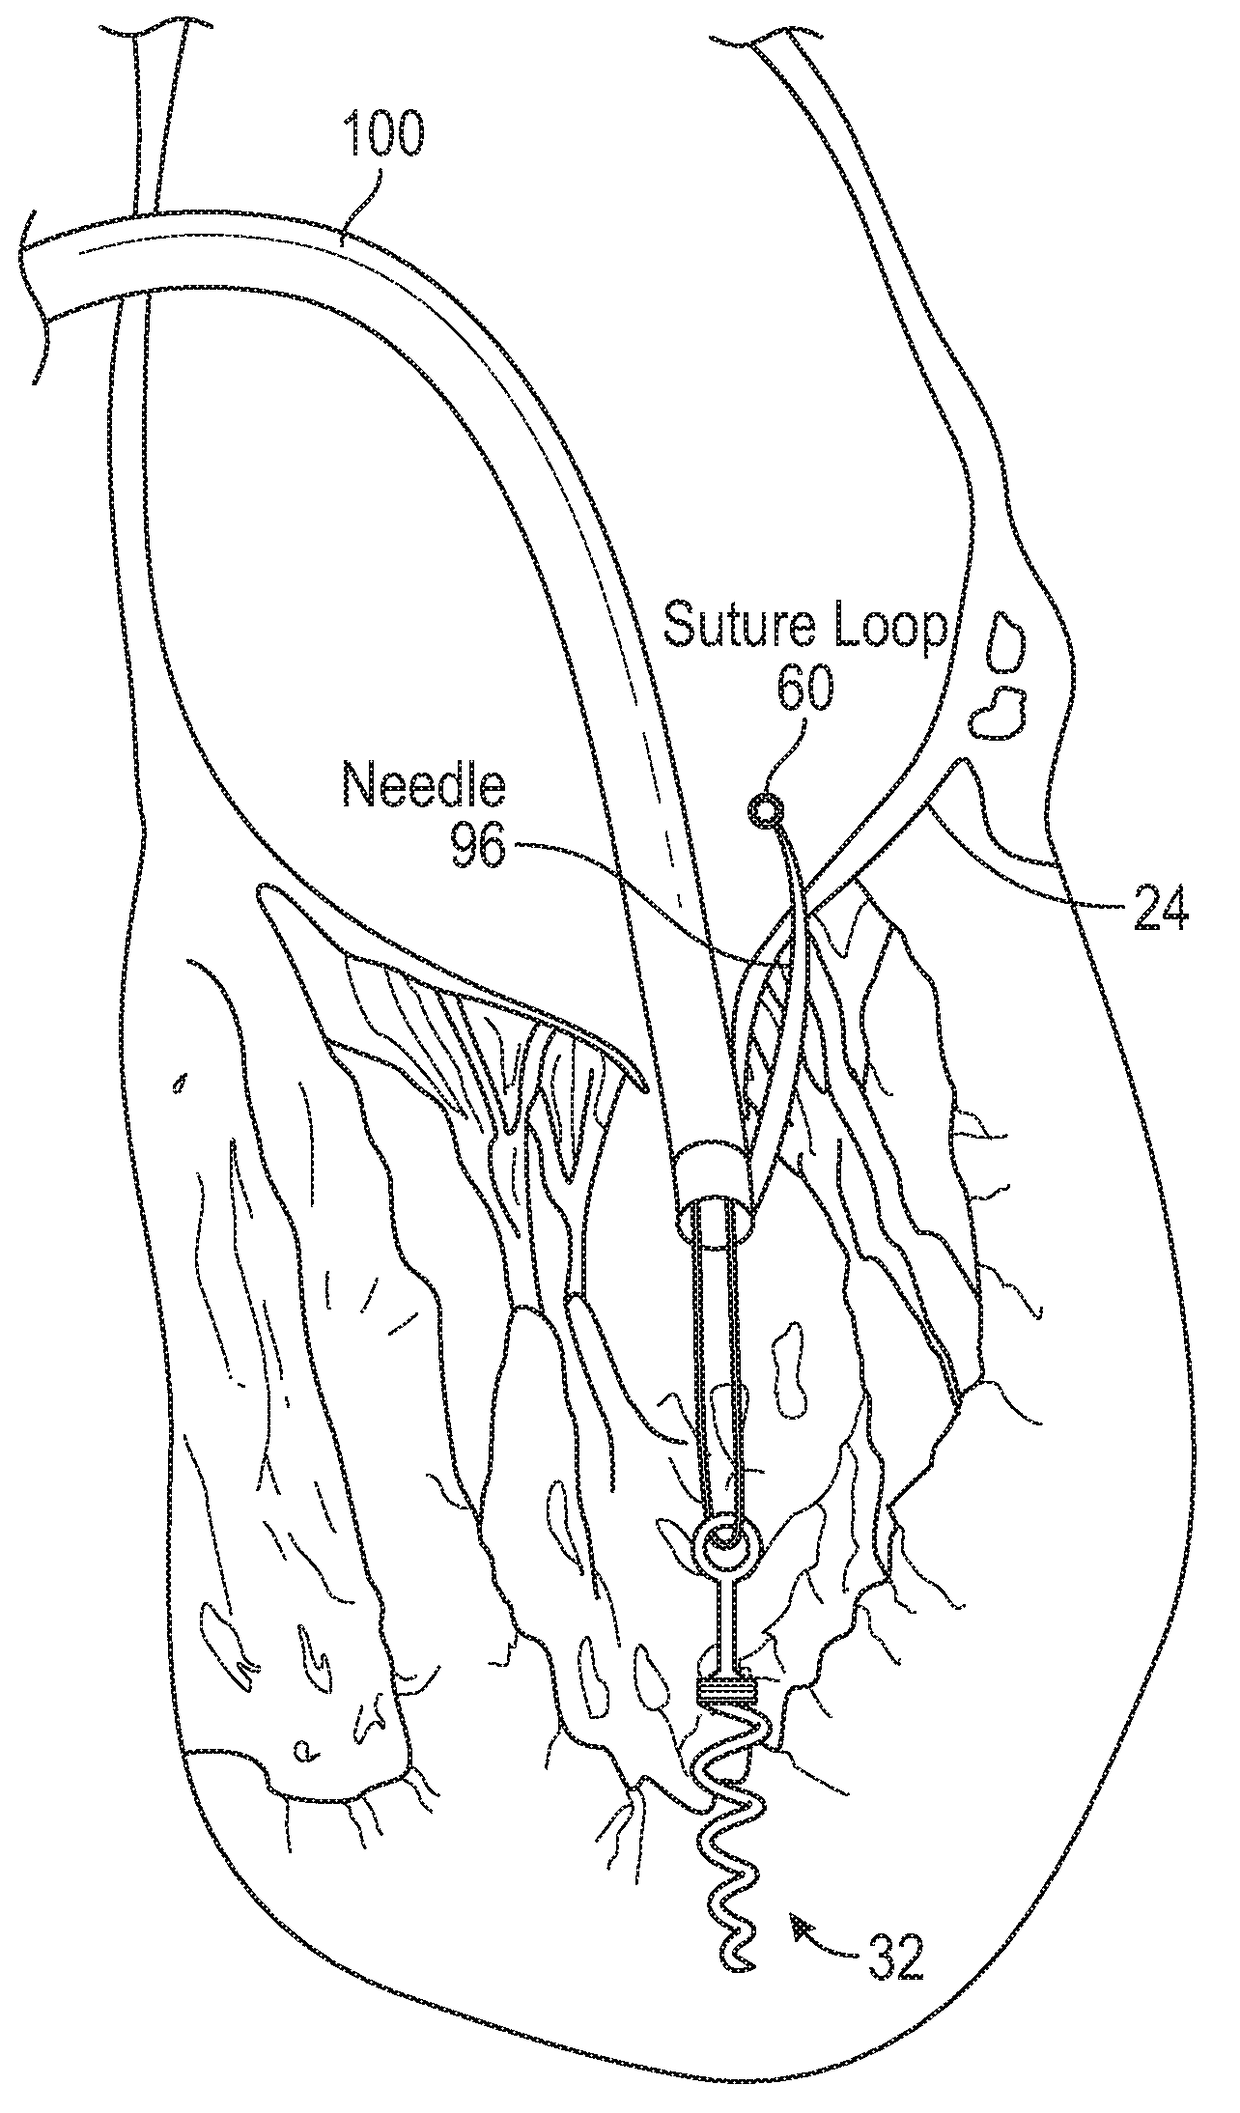 Method and apparatus for transvascular implantation of neo chordae tendinae